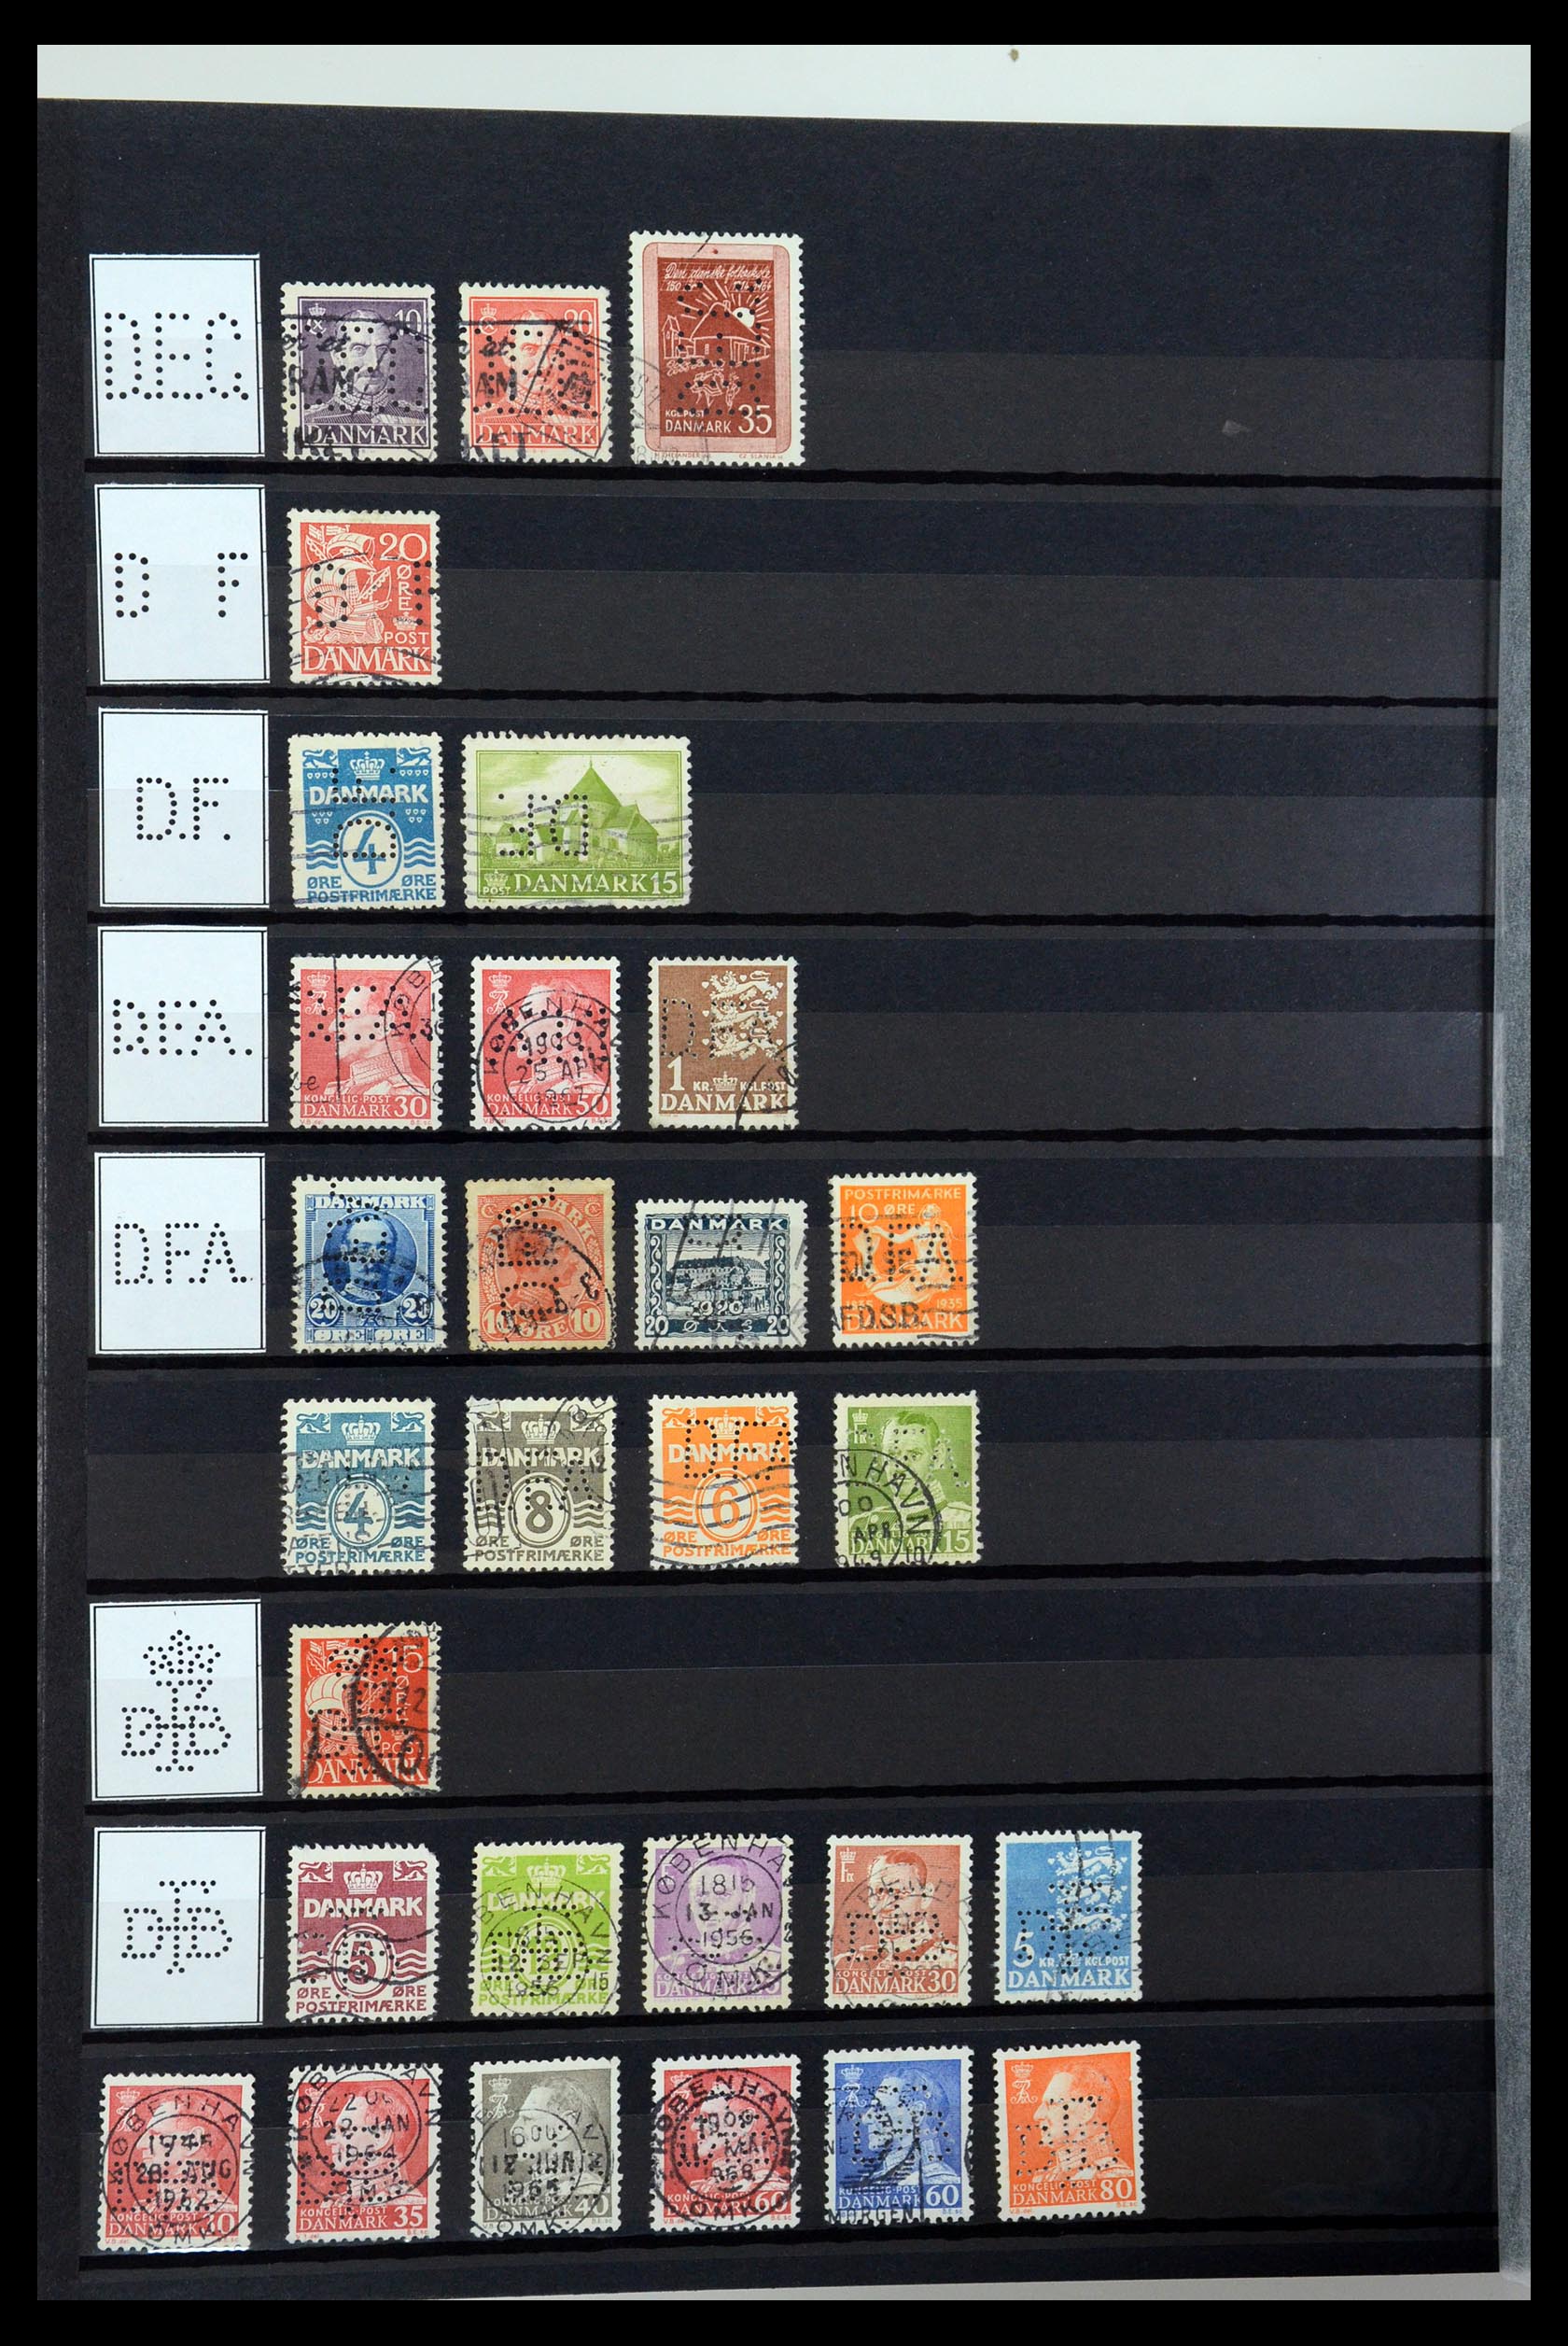 36396 036 - Stamp collection 36396 Denmark perfins.